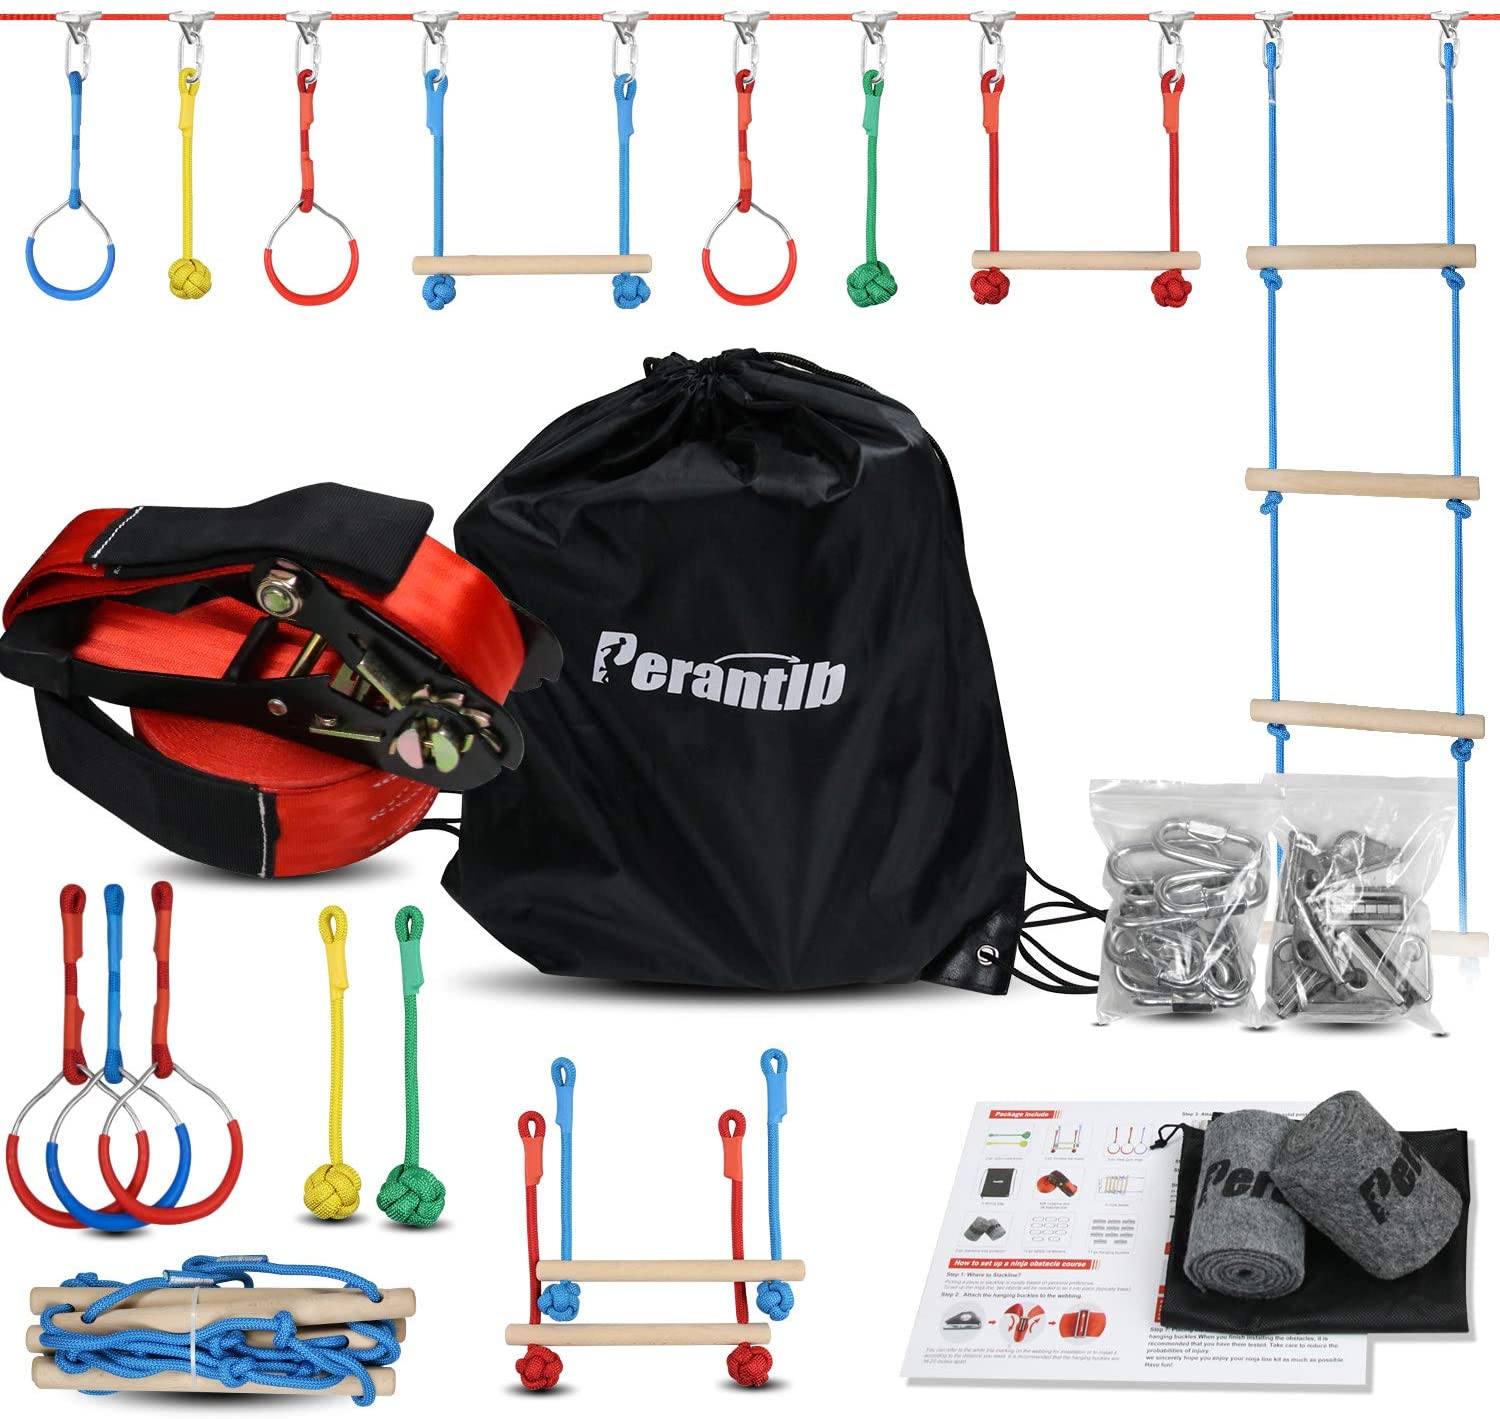 Perantlb Portable Obstacle Course Slackline Kit